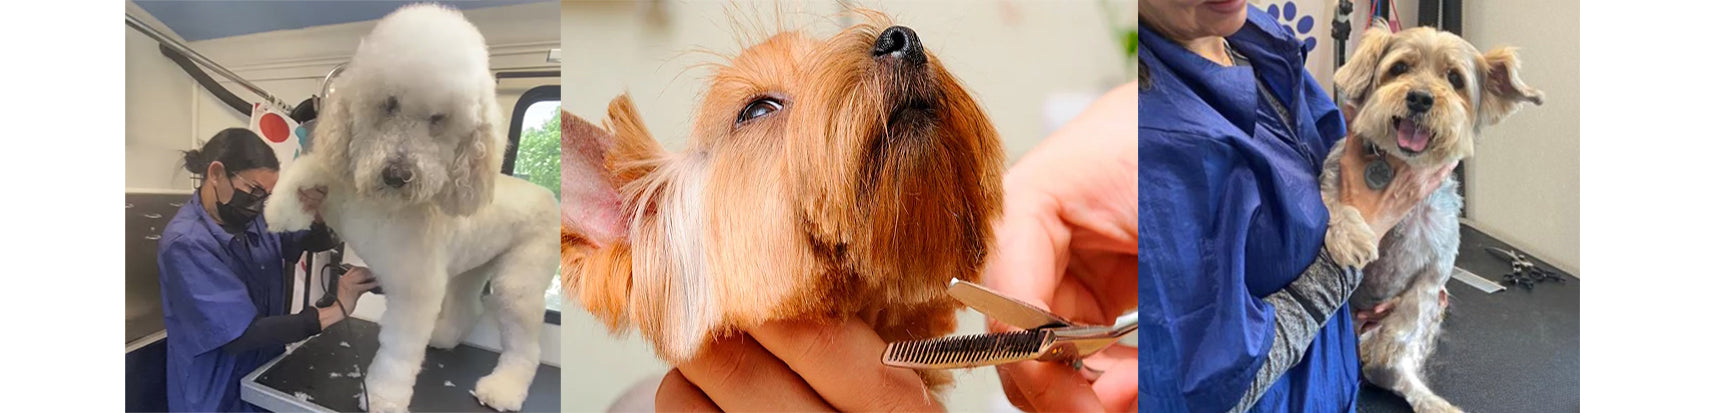 Pet grooming service in Pembroke Pines, Florida